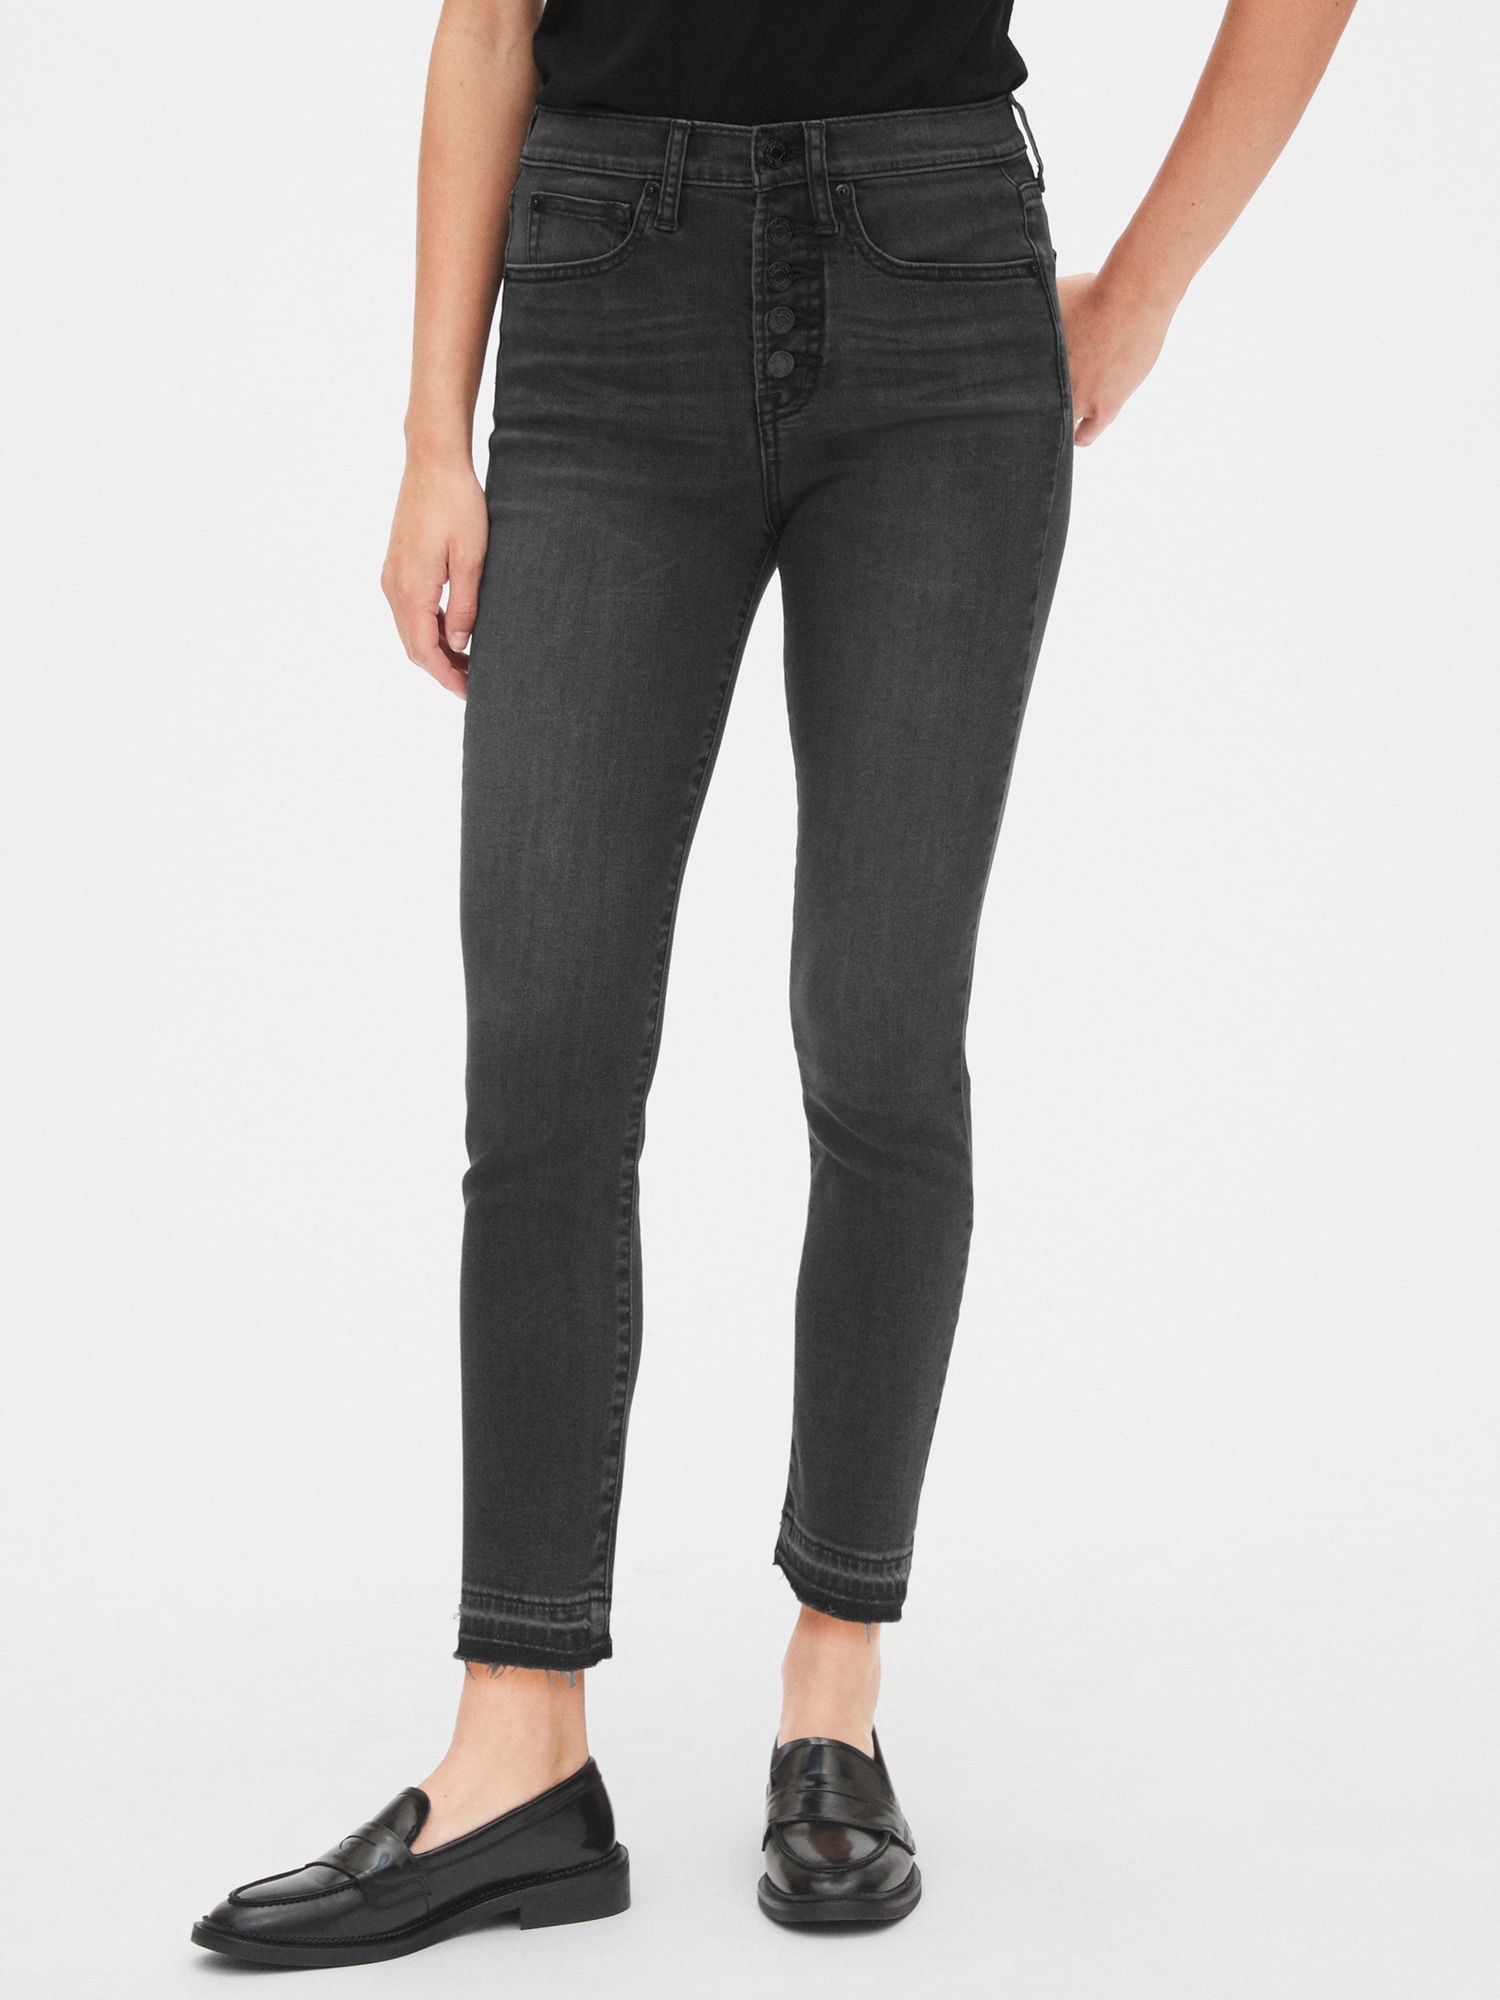 gap true skinny black jeans